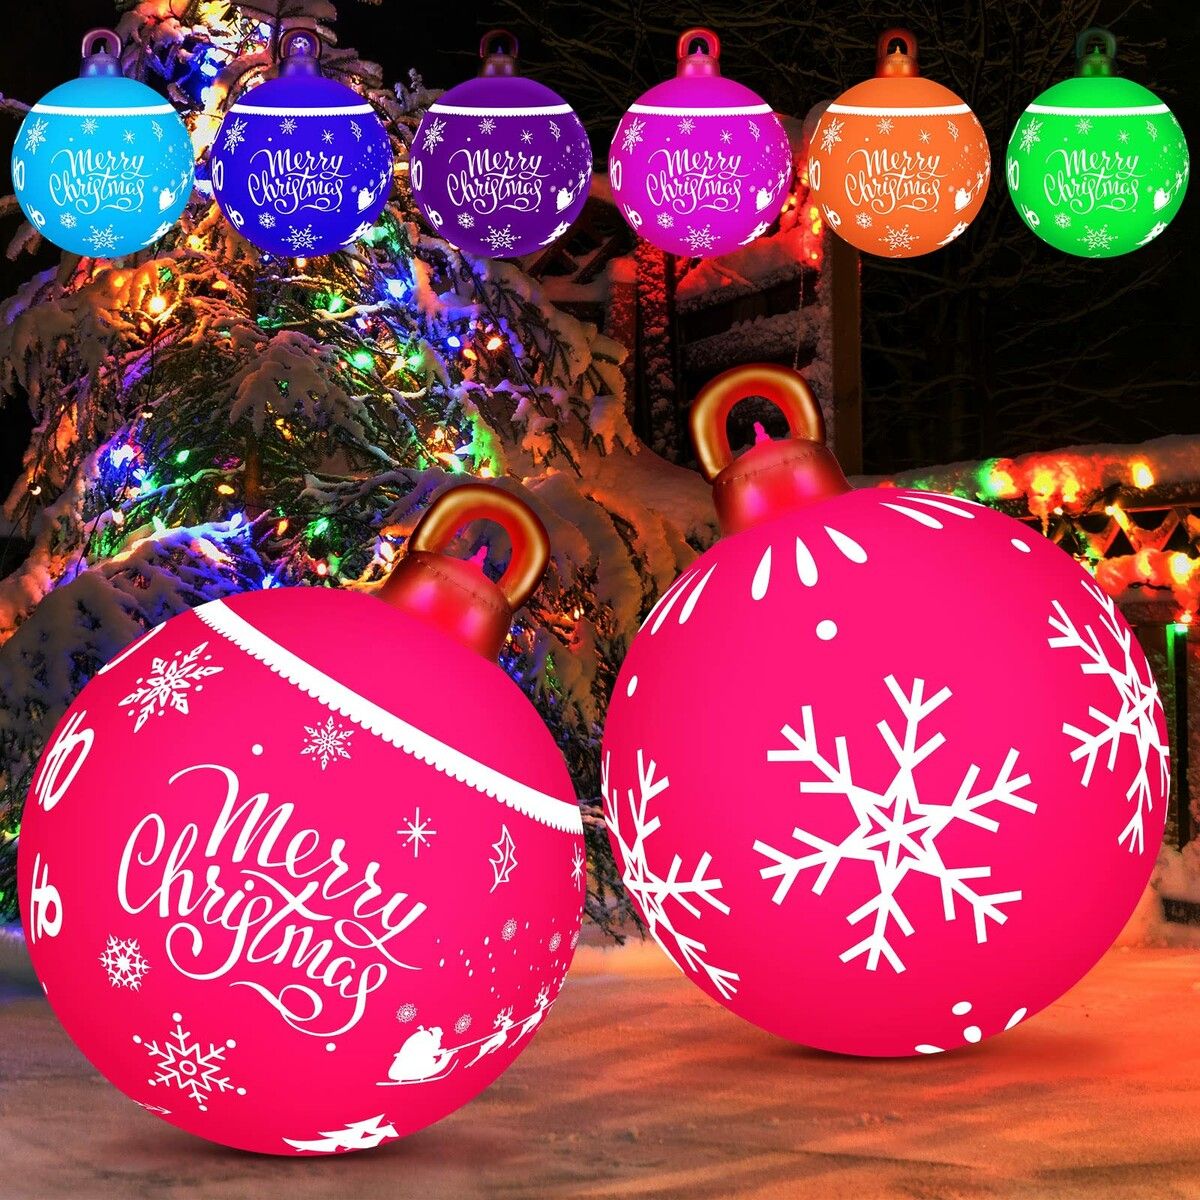 2x 60cm PVC Christmas Lighted Decorated Ball Giant Inflatable Christmas ...